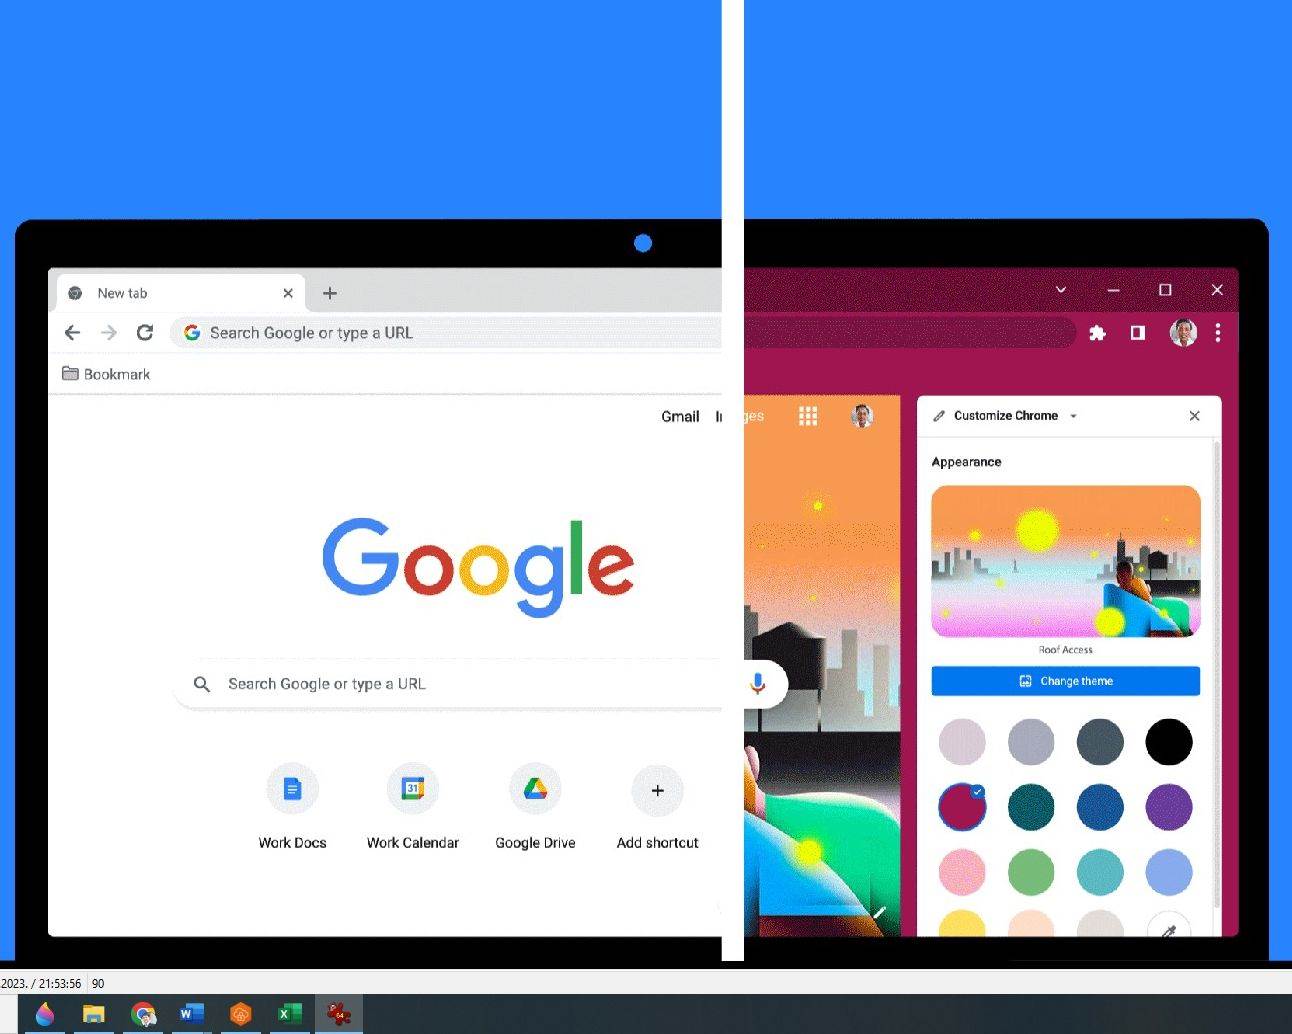  Google Chrome Desktop.jpg 